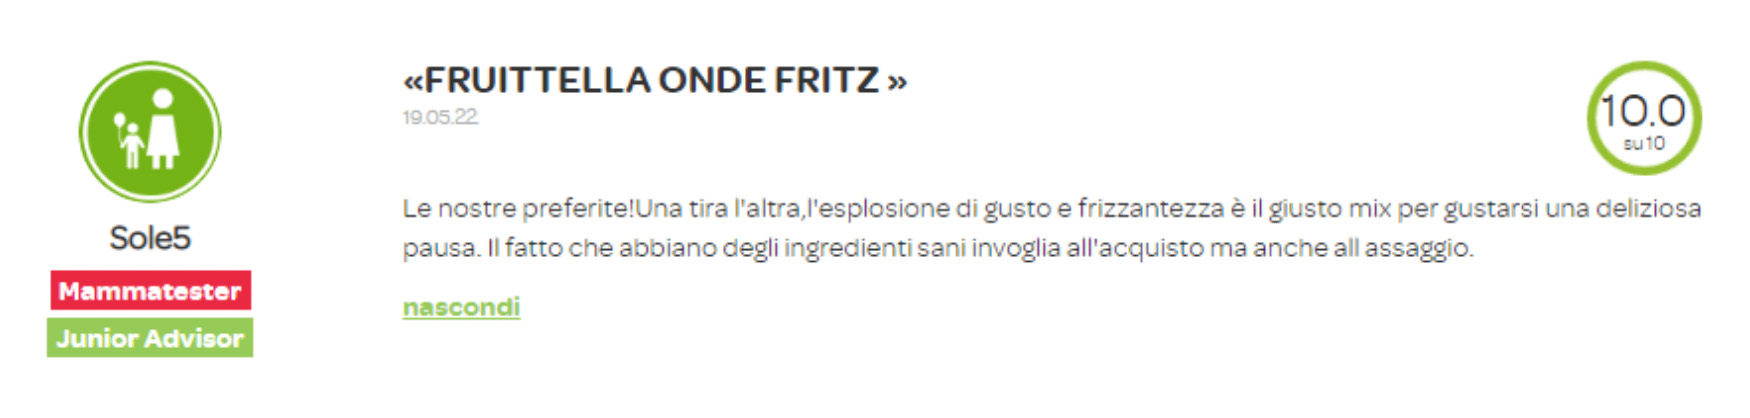 fruittella-onde-frizz-03